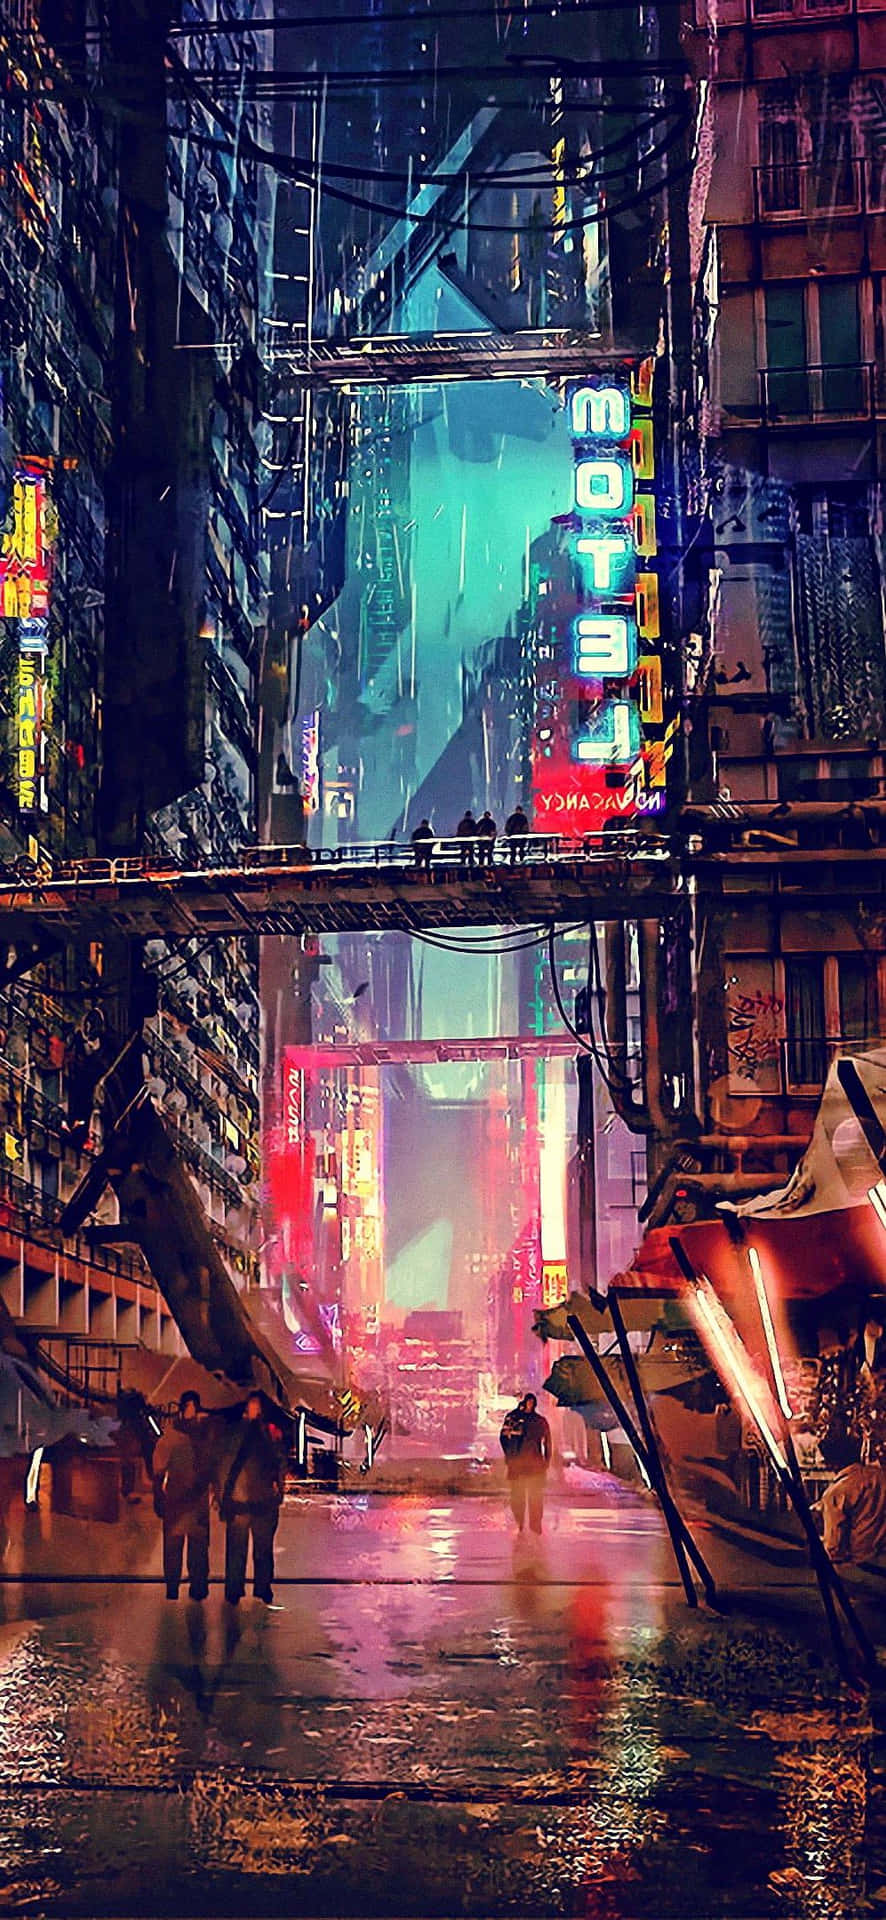 Download wallpaper: Cyberpunk 2077 city view 1366x768